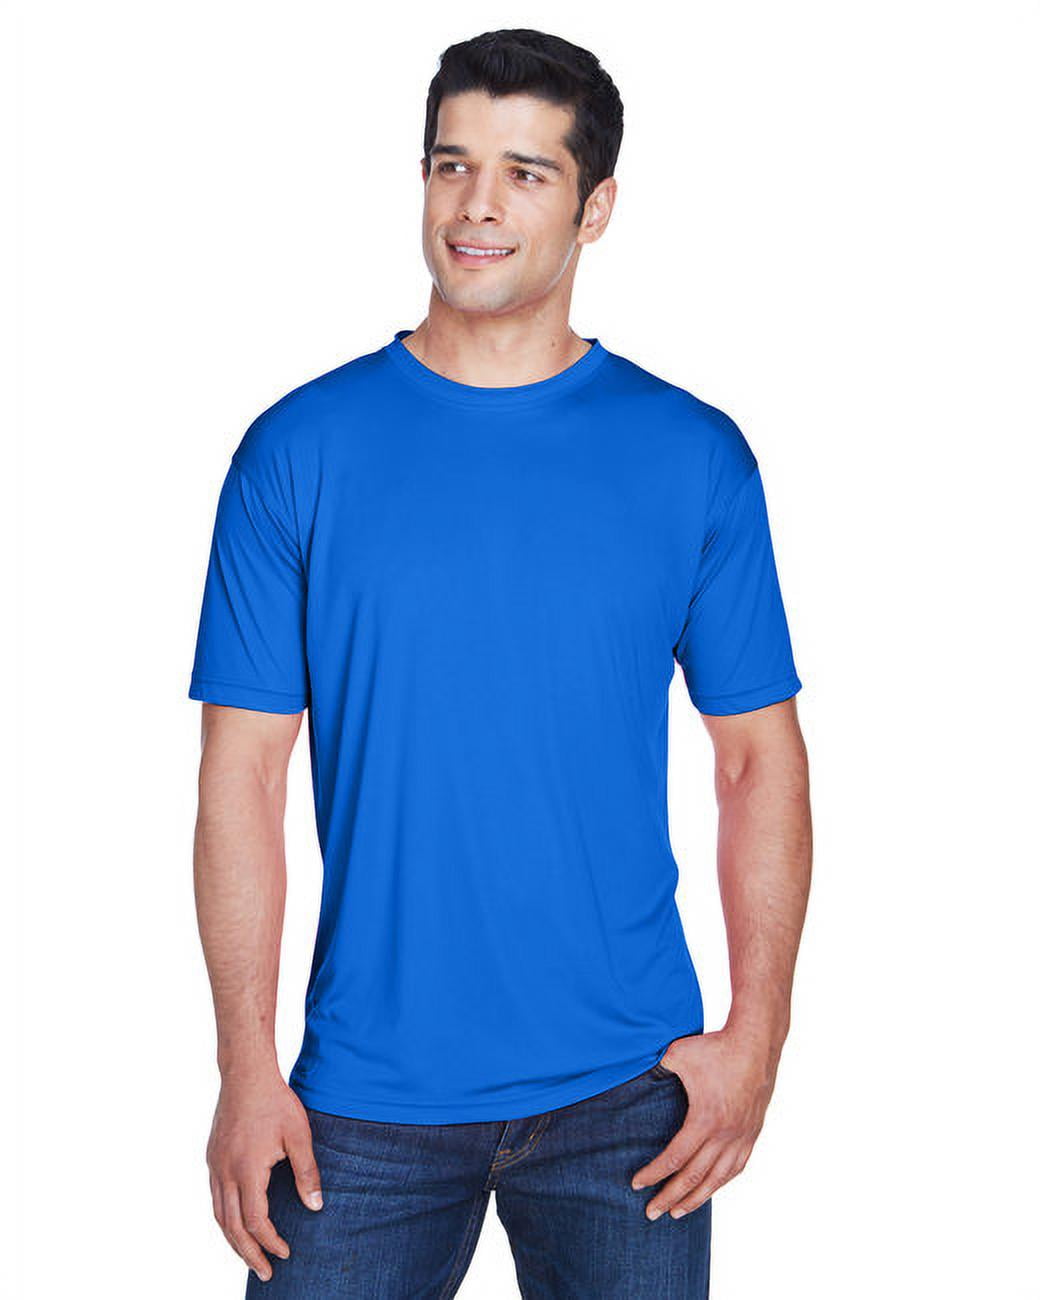 NavyBlue Color Details about   Small-Size Men's Regular DryFit T-Shirt 